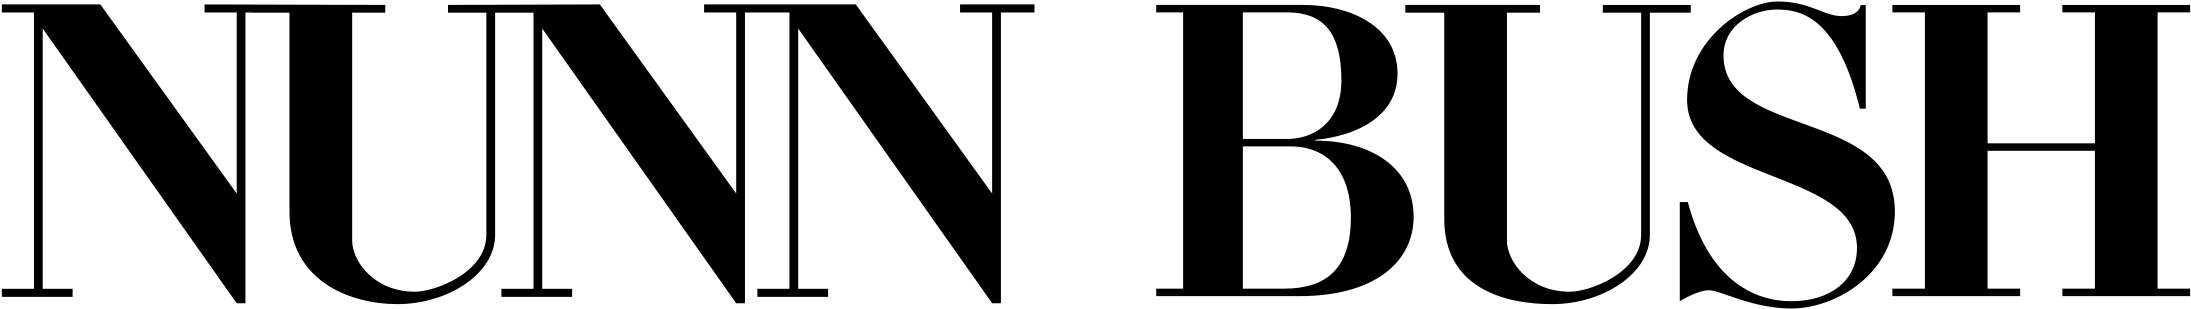 Nunn Bush Logo Png Transparent - Nunn Bush Logo Png (2400x2400), Png Download